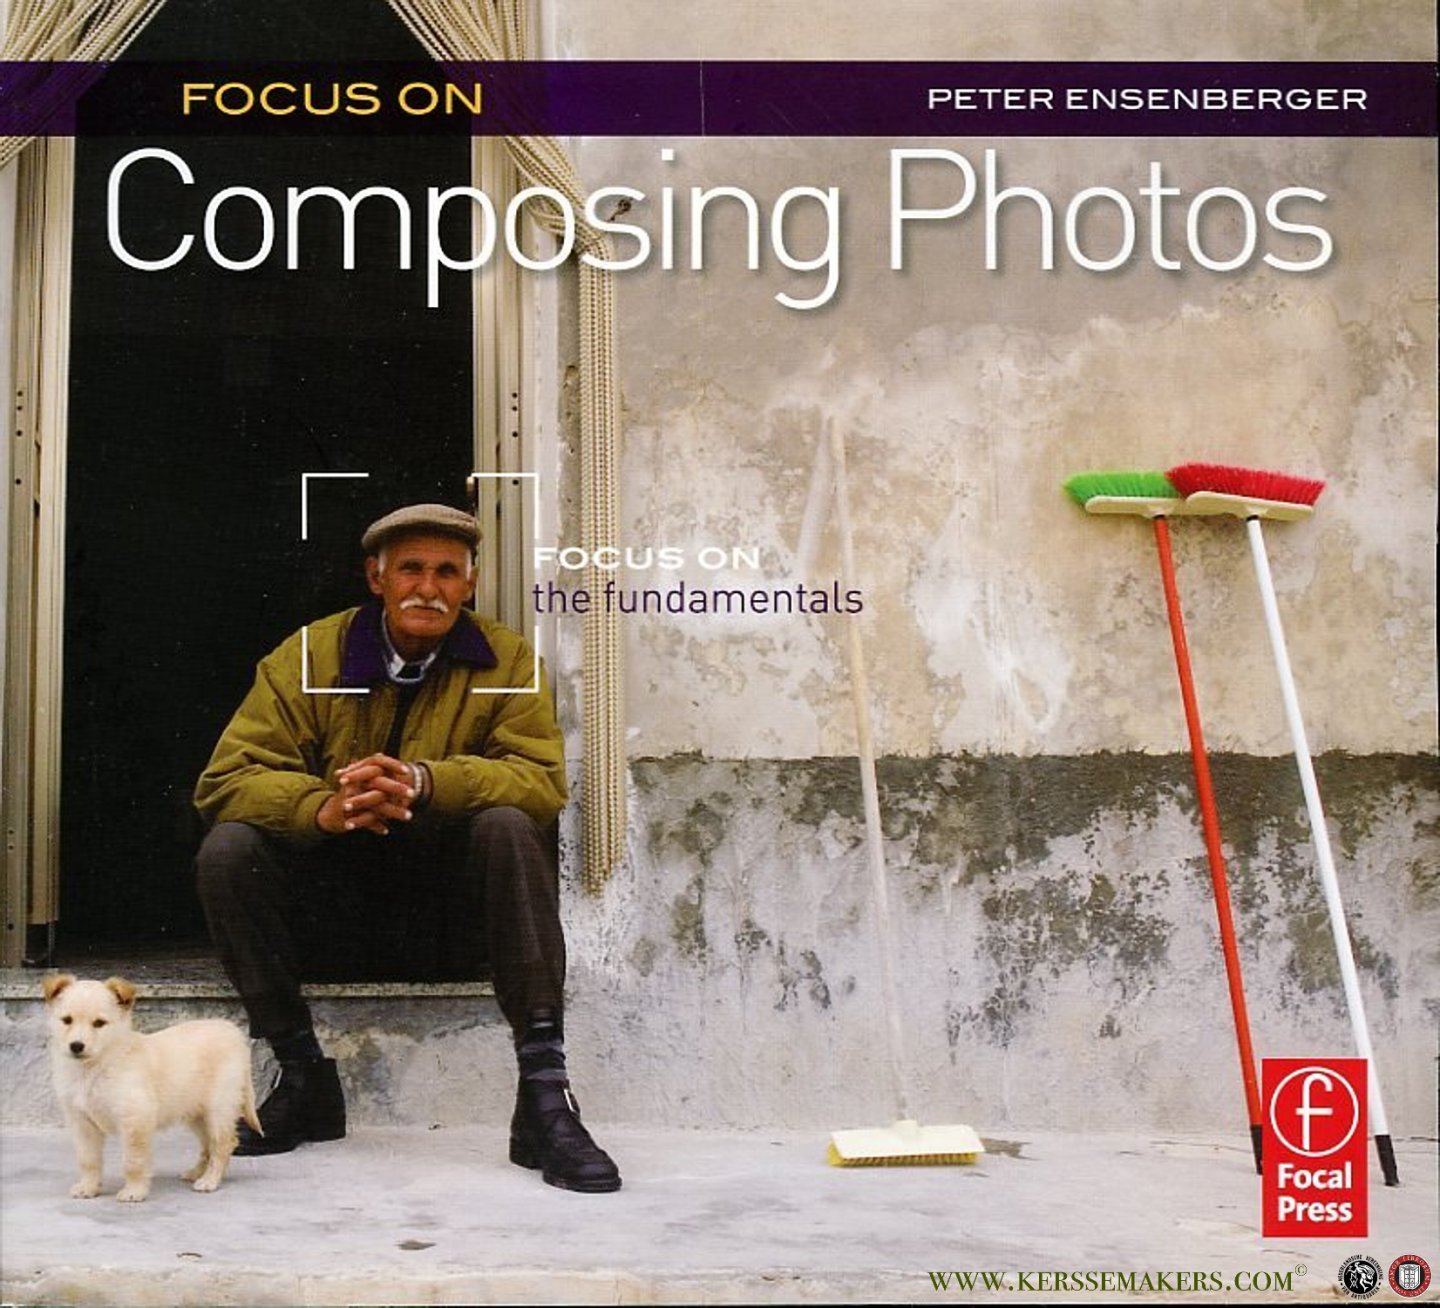 Ensenberger, Peter - Focus On Composing Photos - Focus on the fundamentals